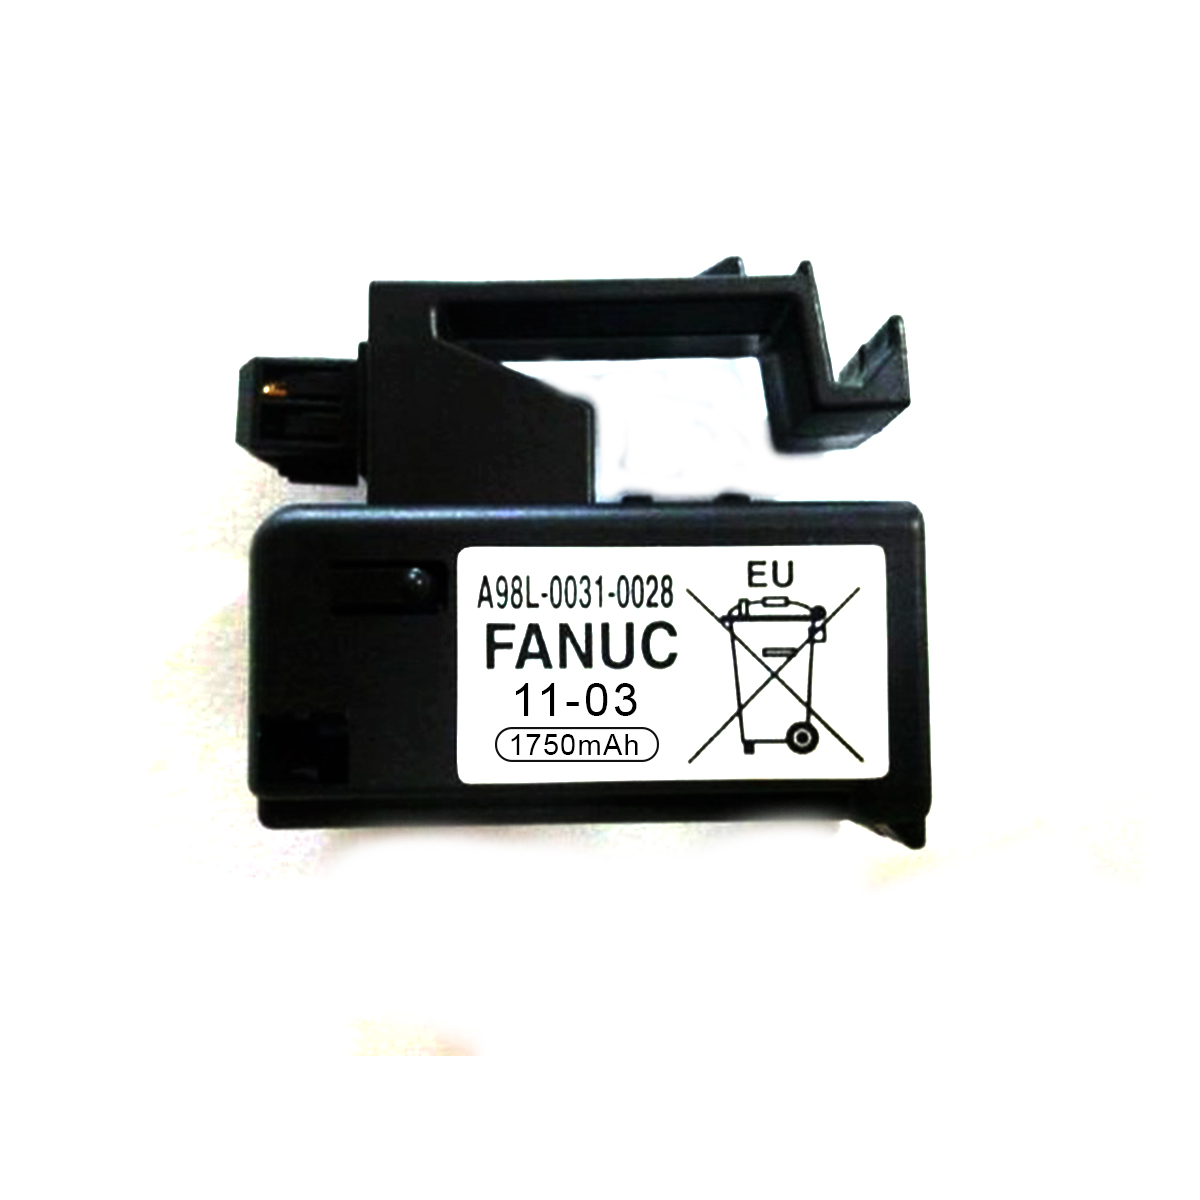 Fanuc A98L-0031-0028 A02B-0323-K102 1750mAH